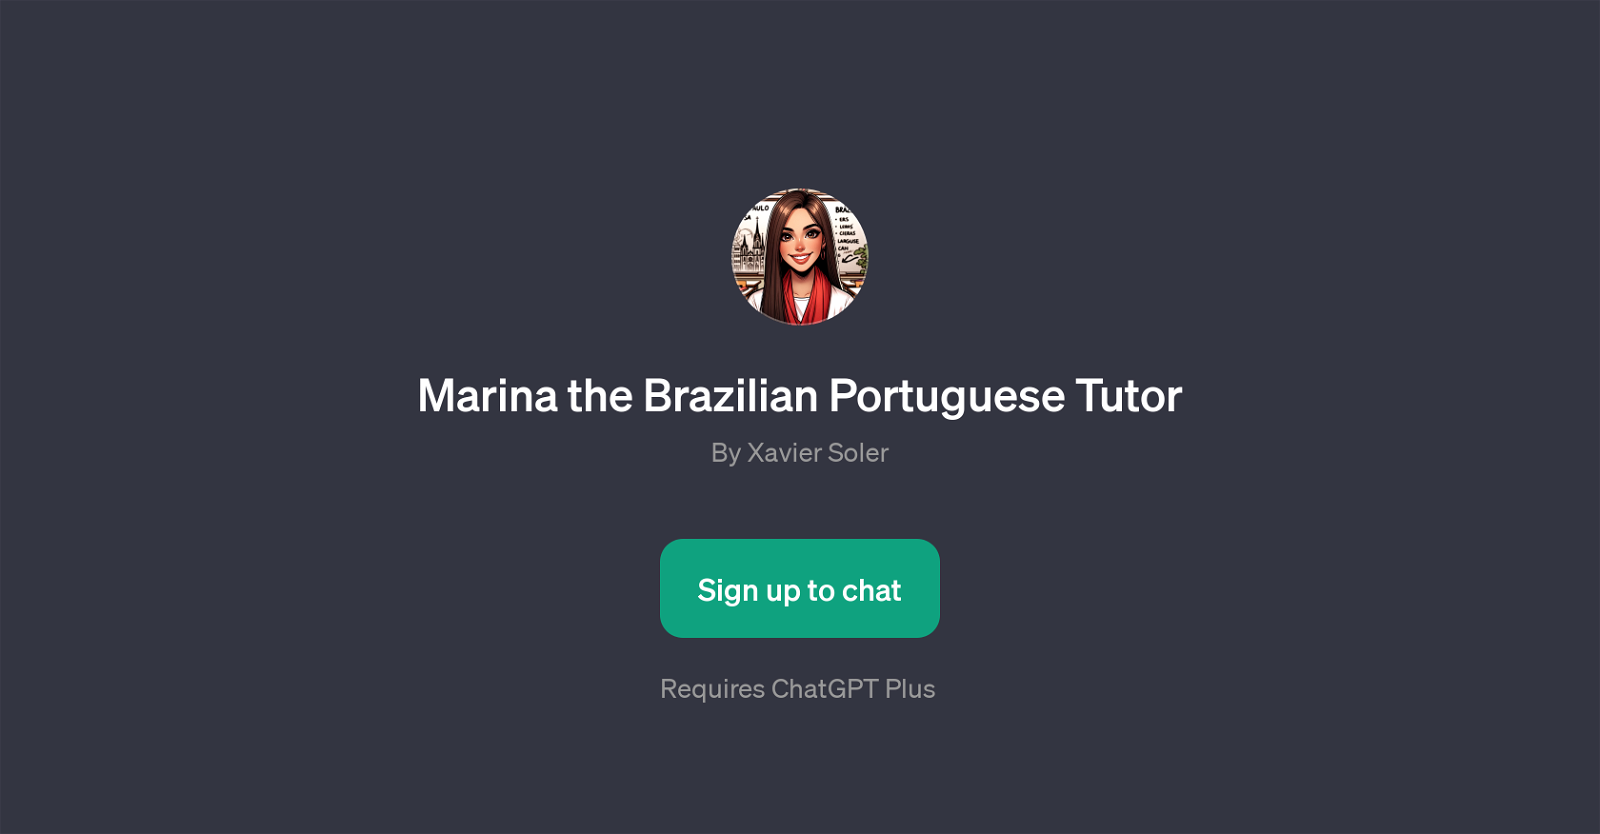 Marina the Brazilian Portuguese Tutor website